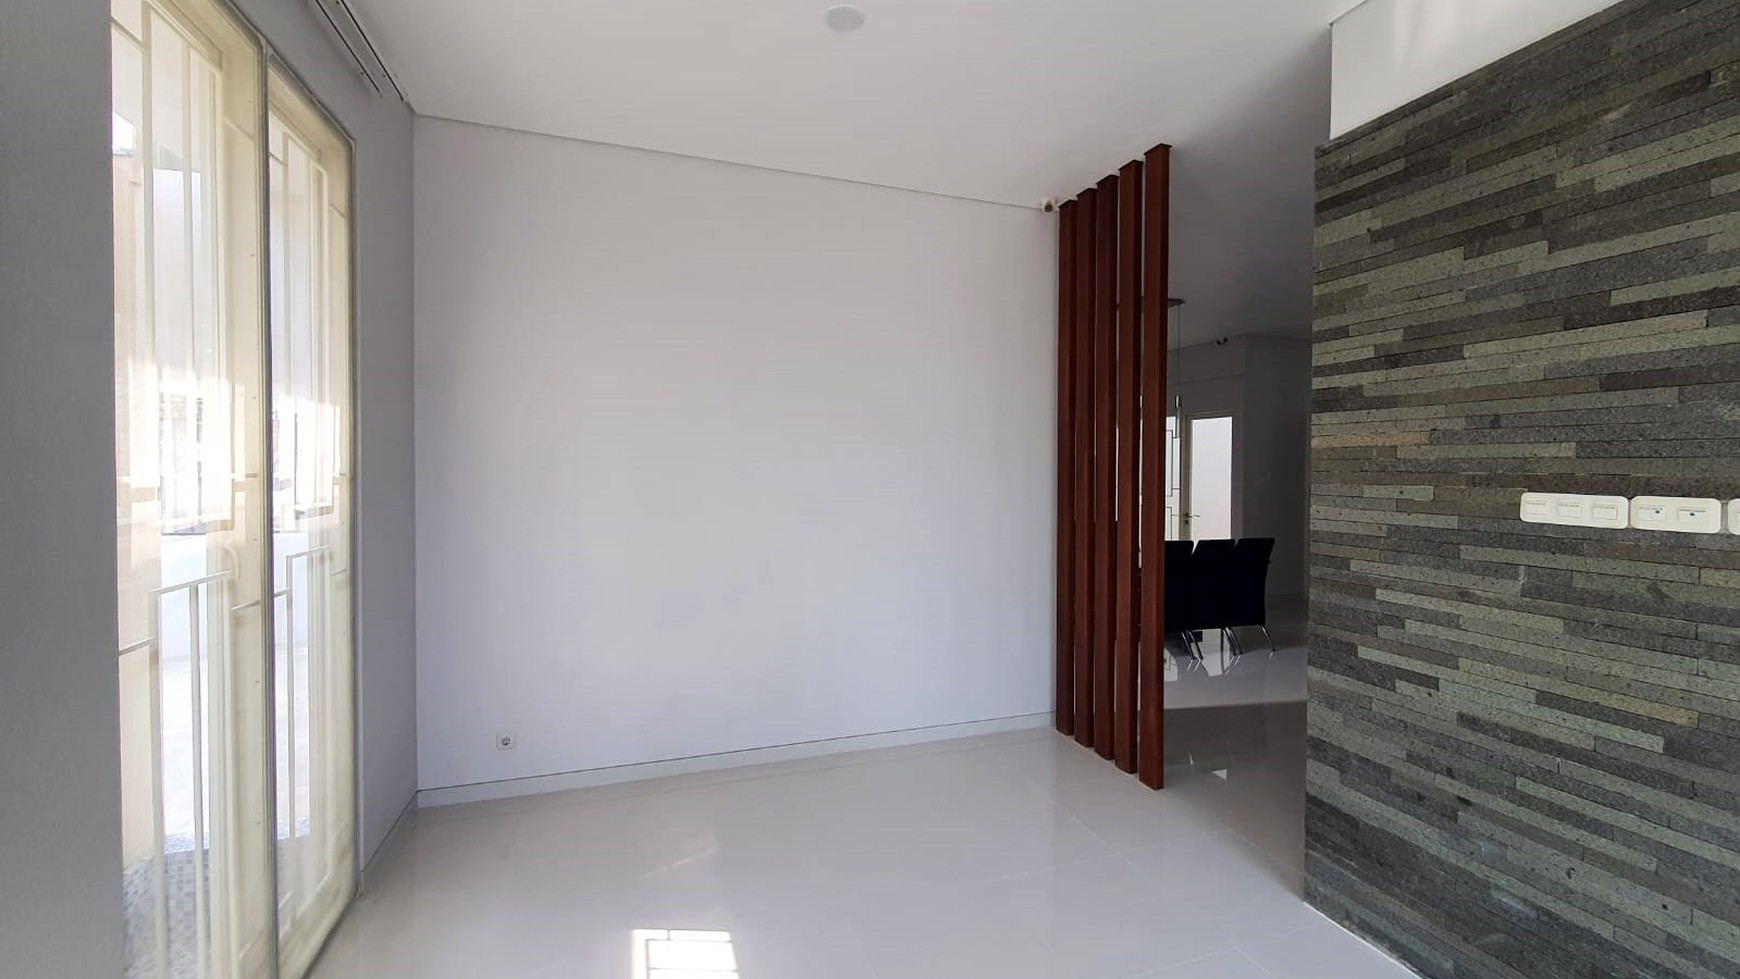 Rumah Baru Citraland di Woodland Surabaya Barat, Minimalis, 2 Lantai, Semi Furnished, Hook/Pojokan, siap huni